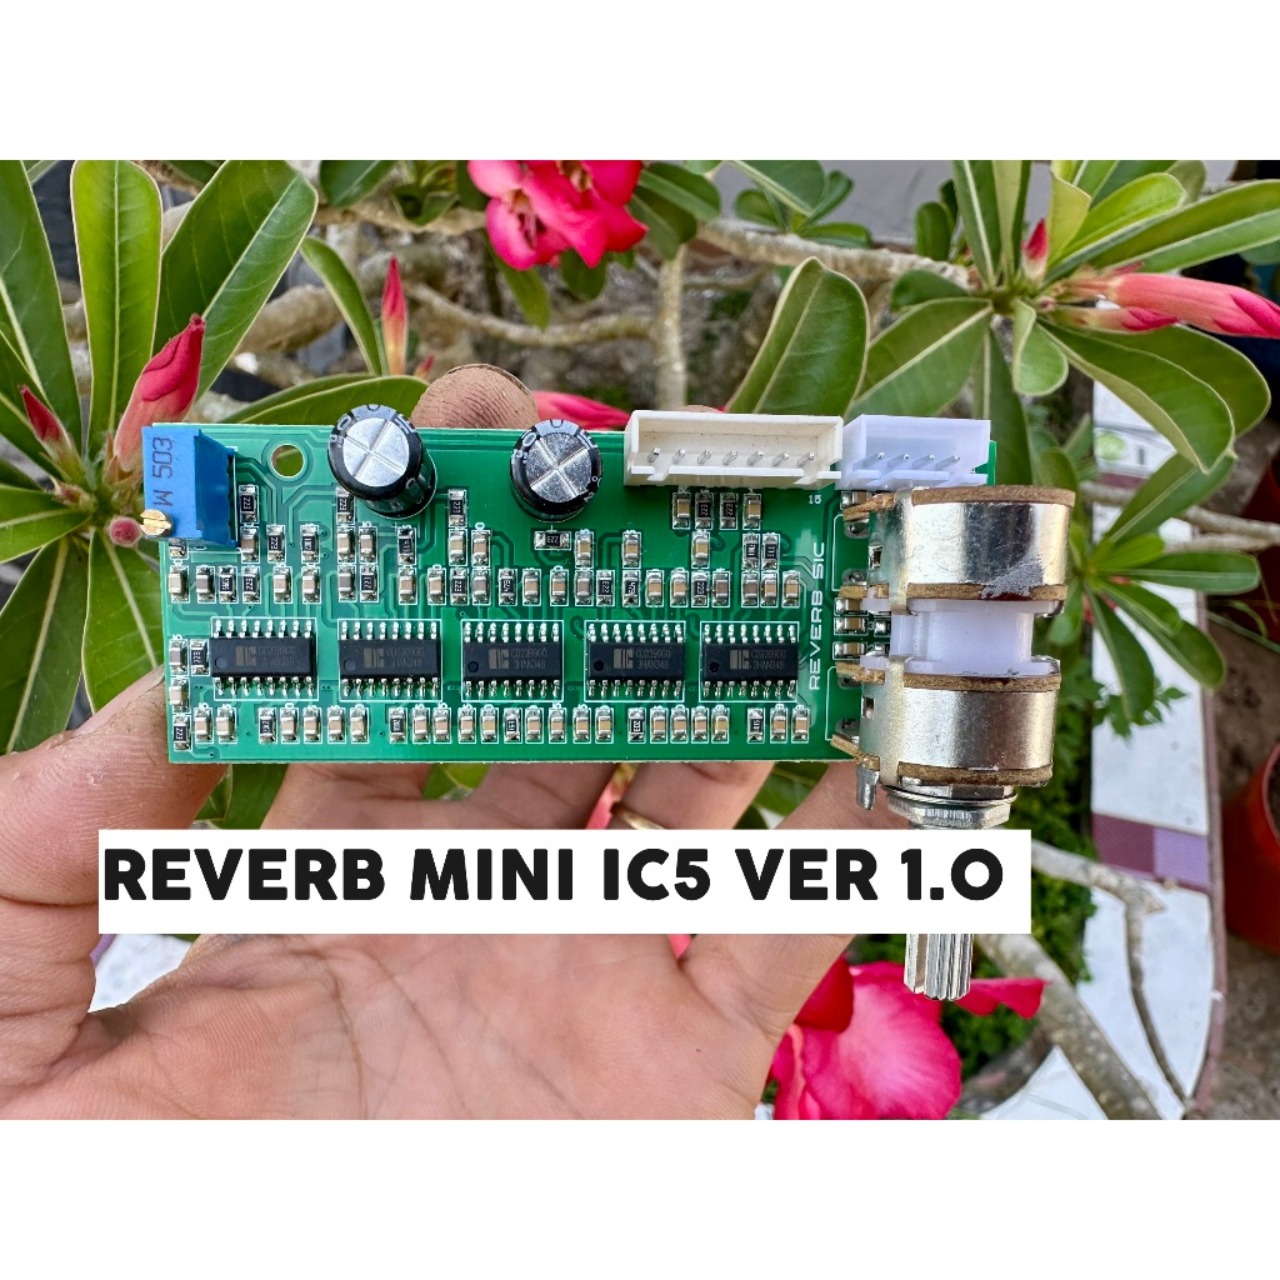 REVERB MINI IC5 VER 1.0 dùng cho ampli, loa kéo, mixer